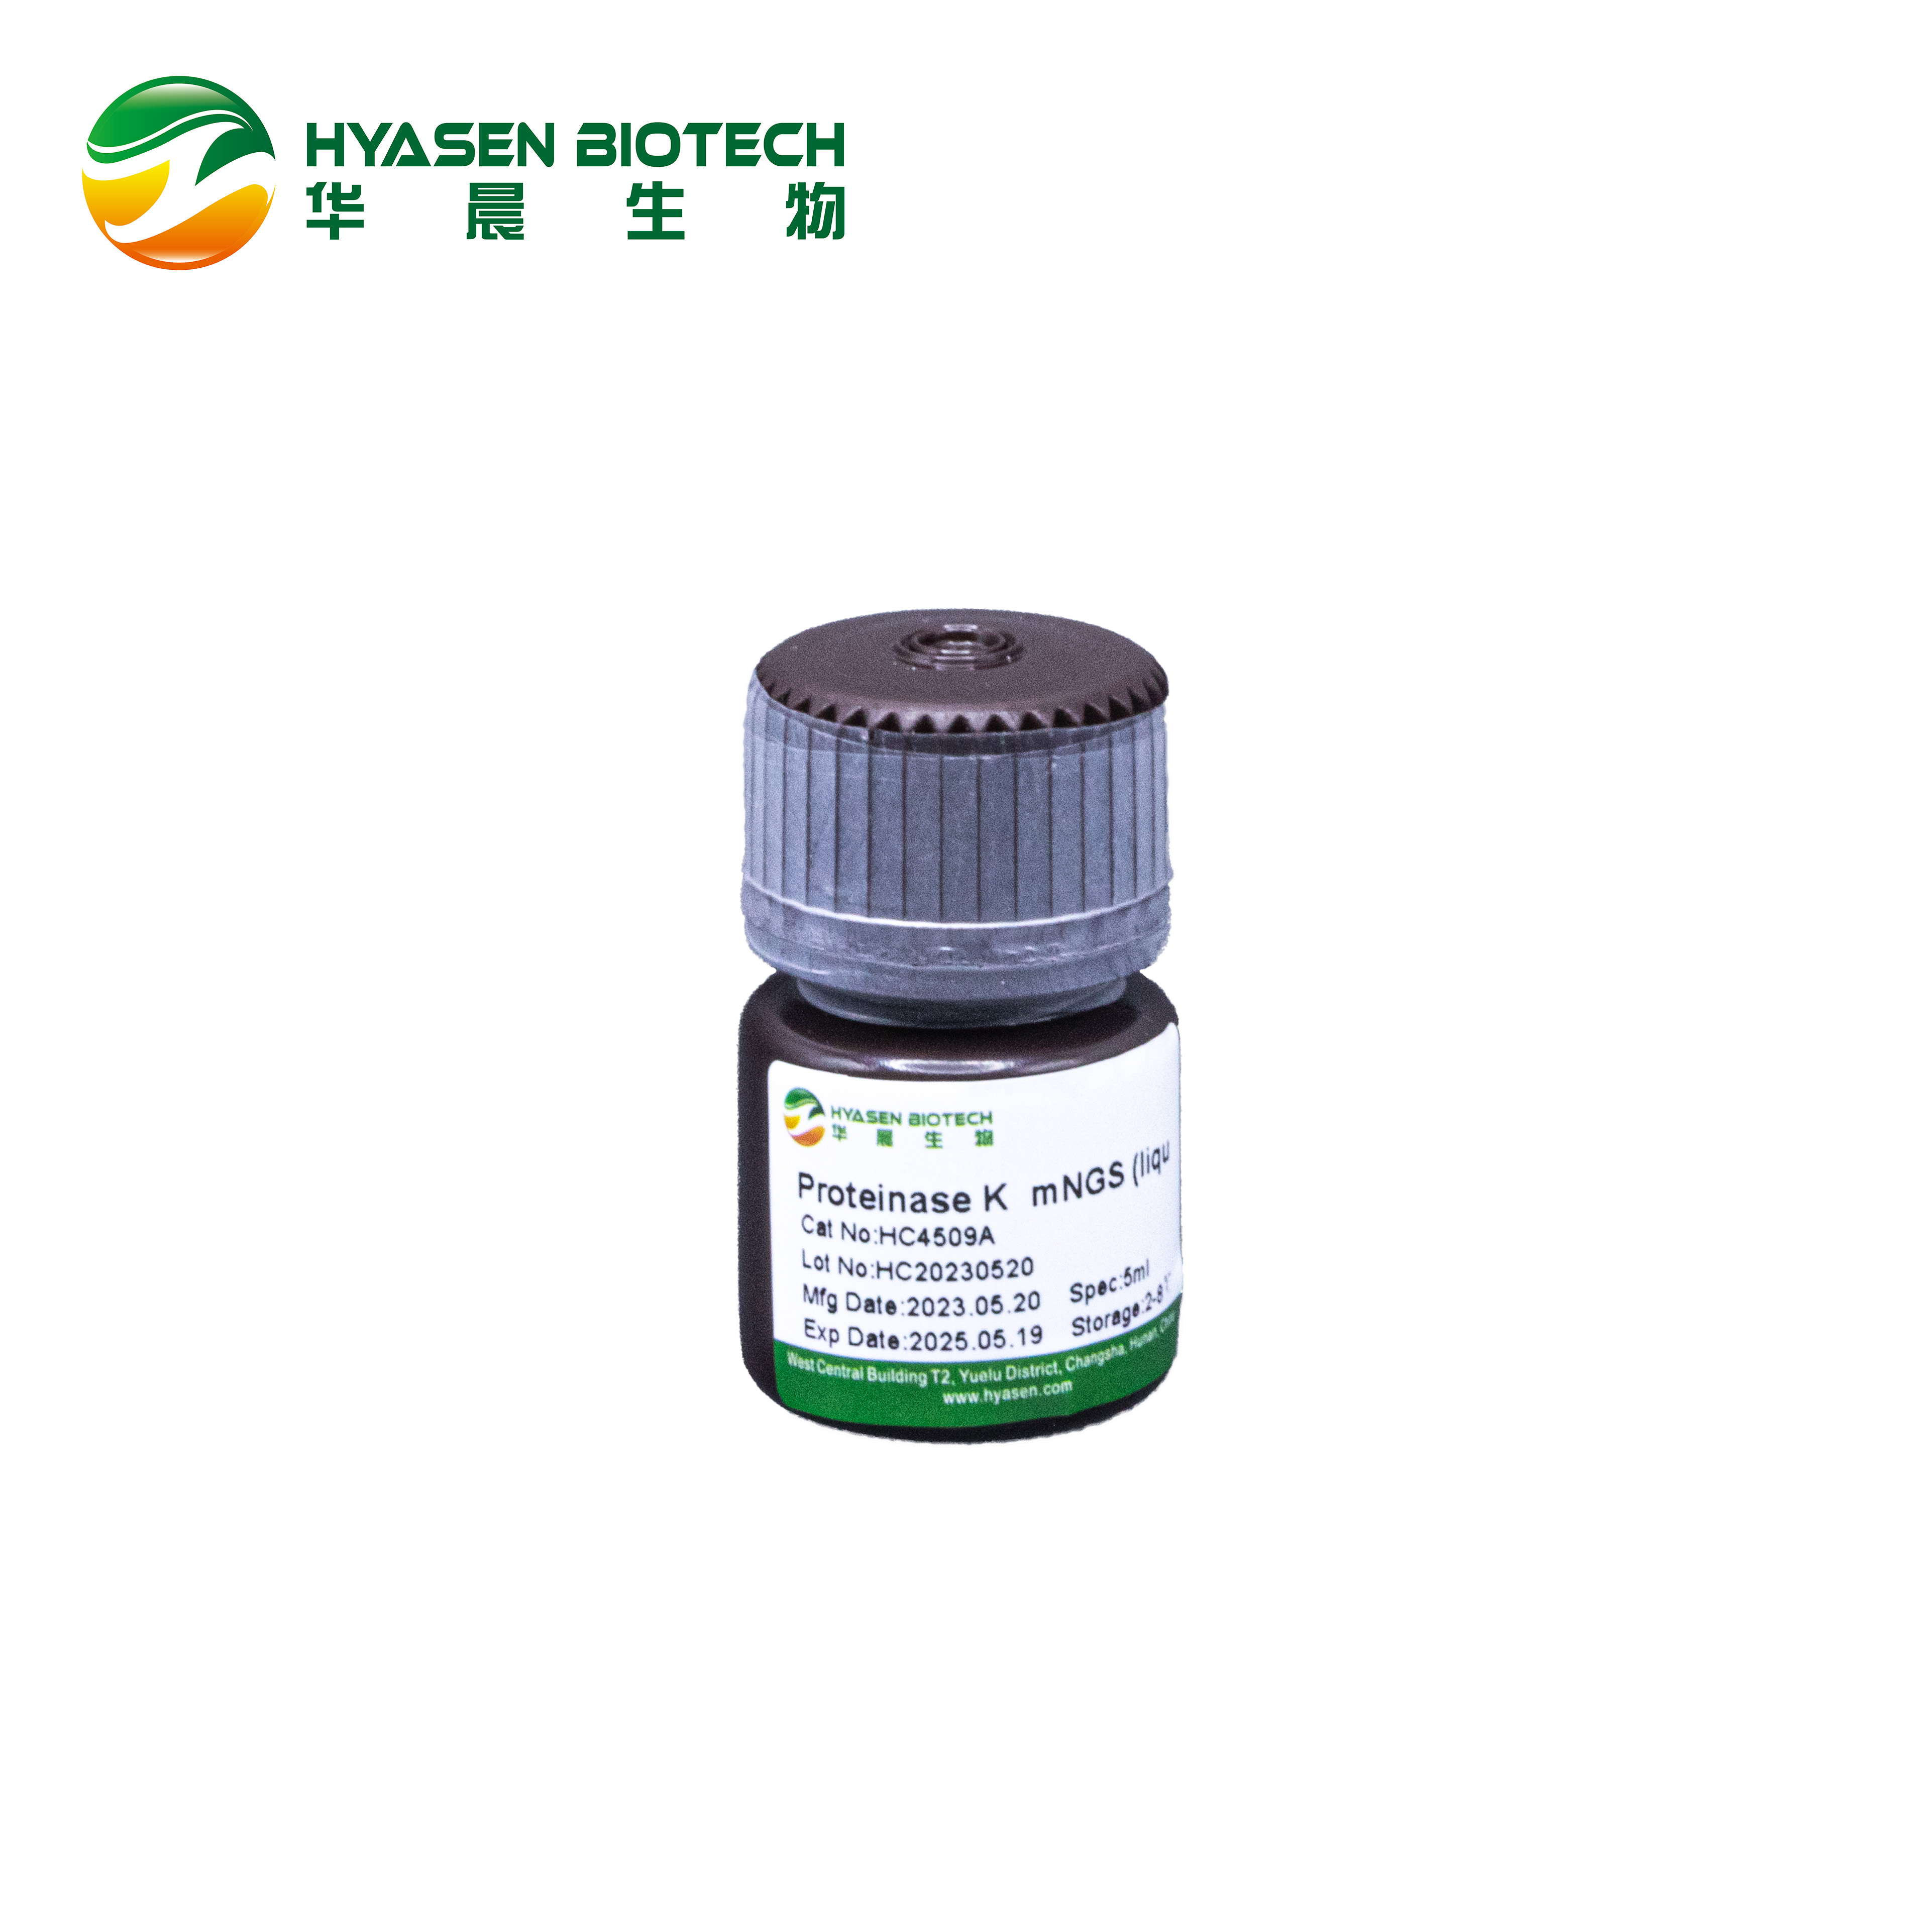 Proteinase K mNGS (ruwa) HC4509A Fitaccen Hoton